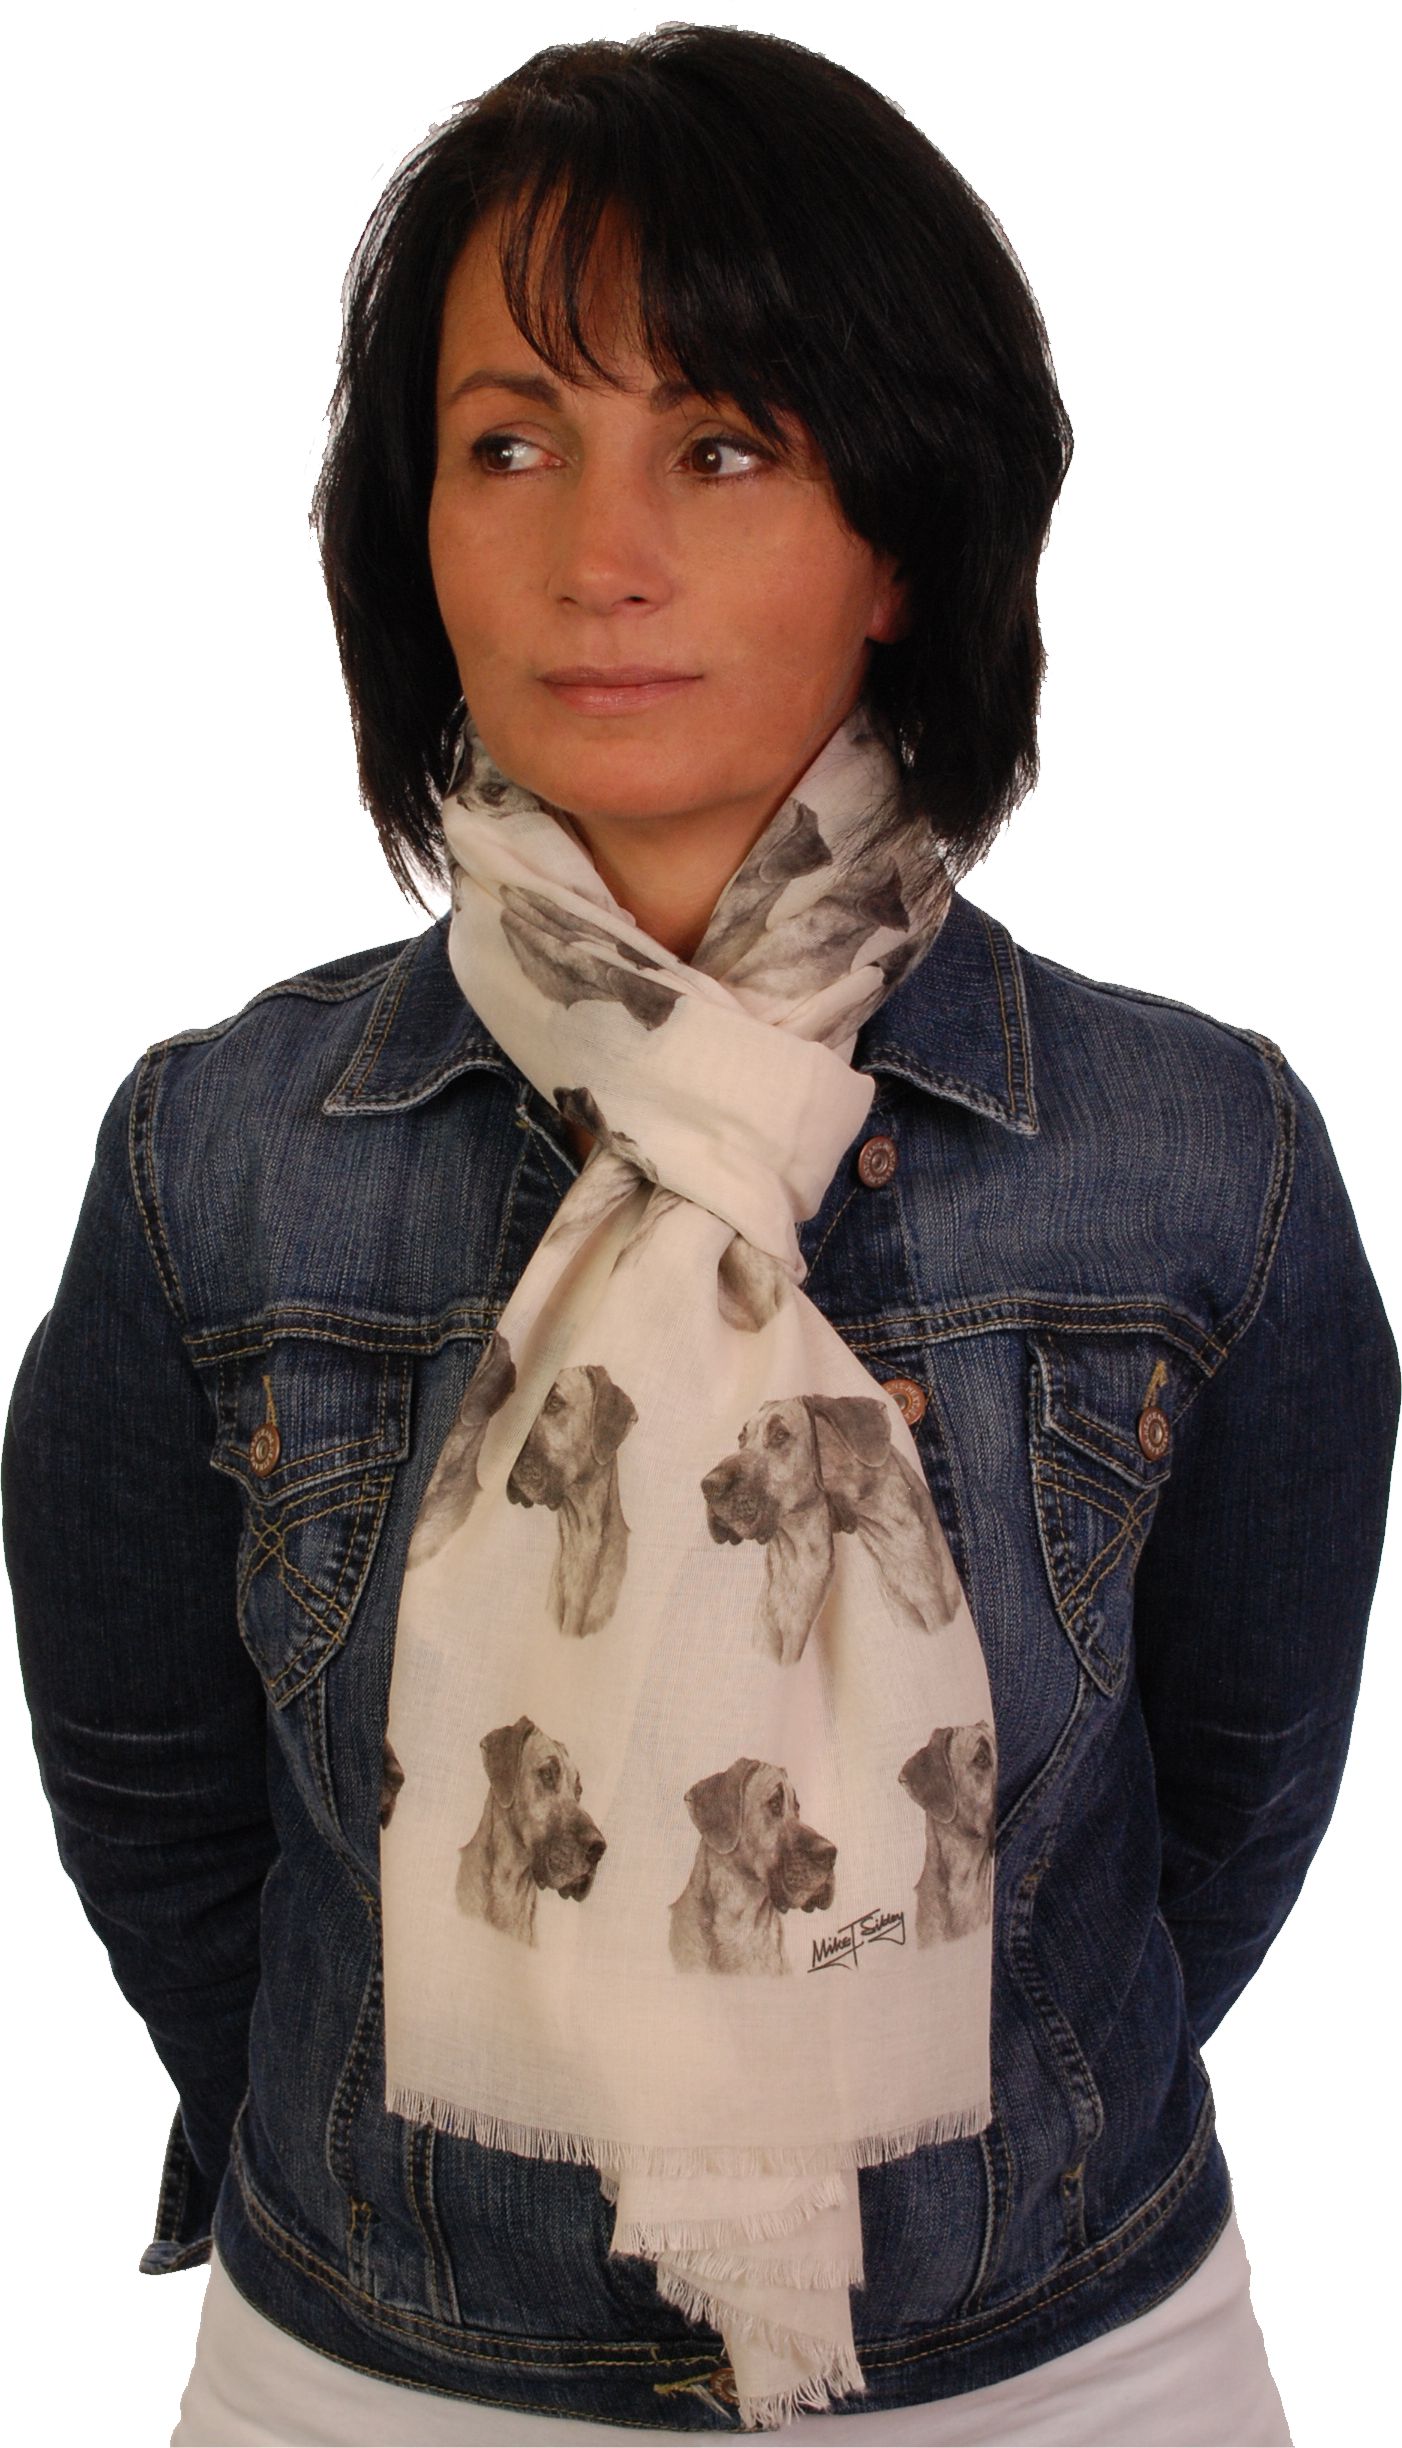 Mike Sibley Great Dane licensed design ladies fashion scarf